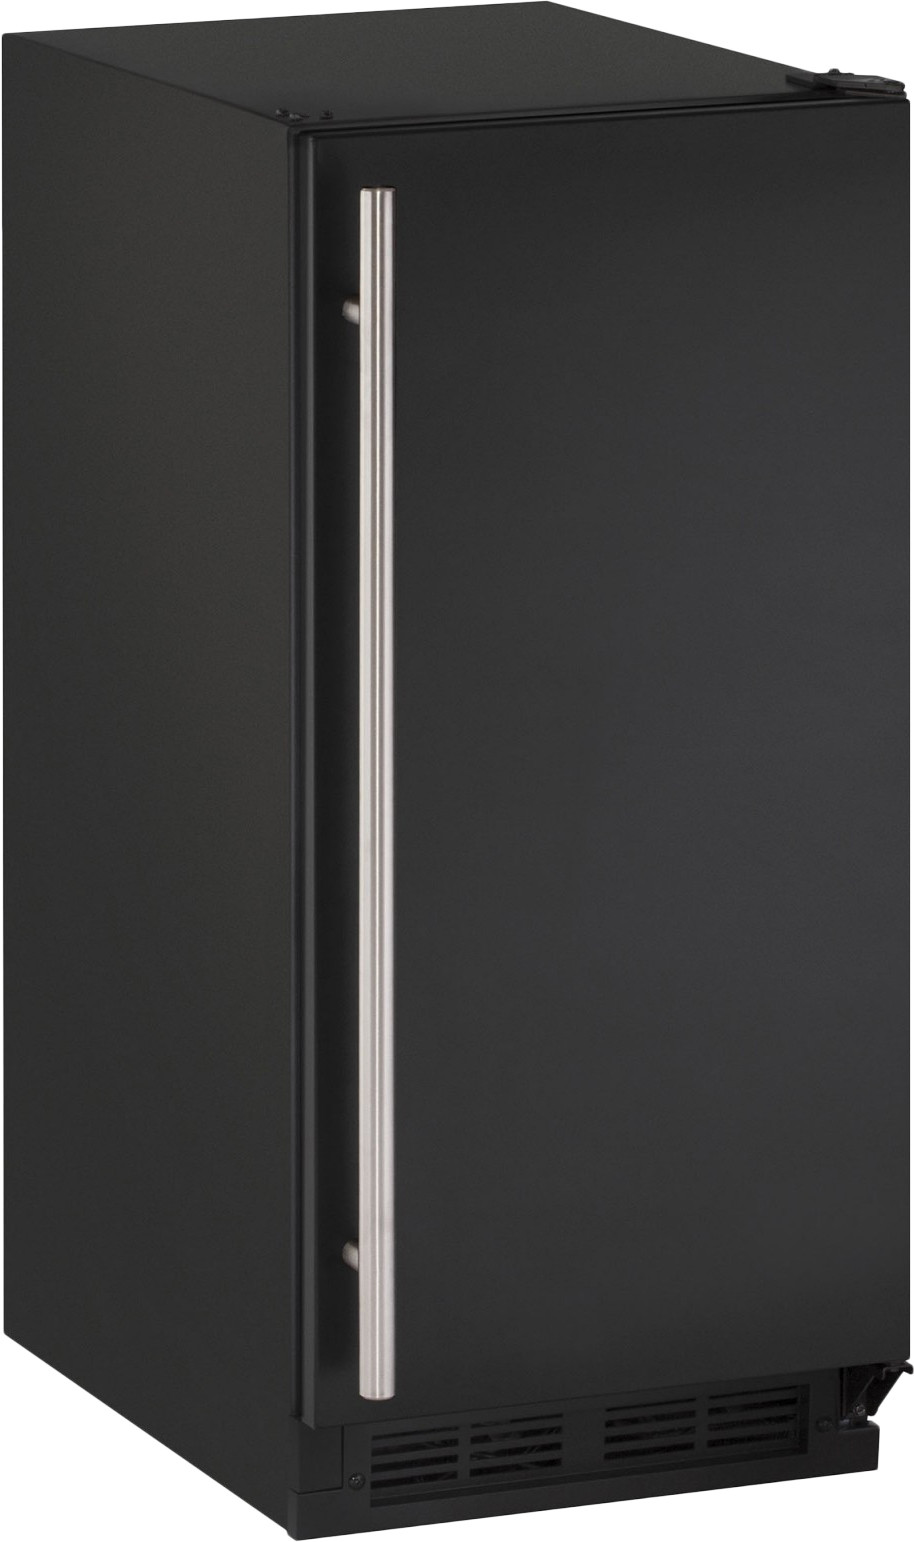 Freestanding Compact Refrigerator, Tempered Glass Shelves For Refrigerators